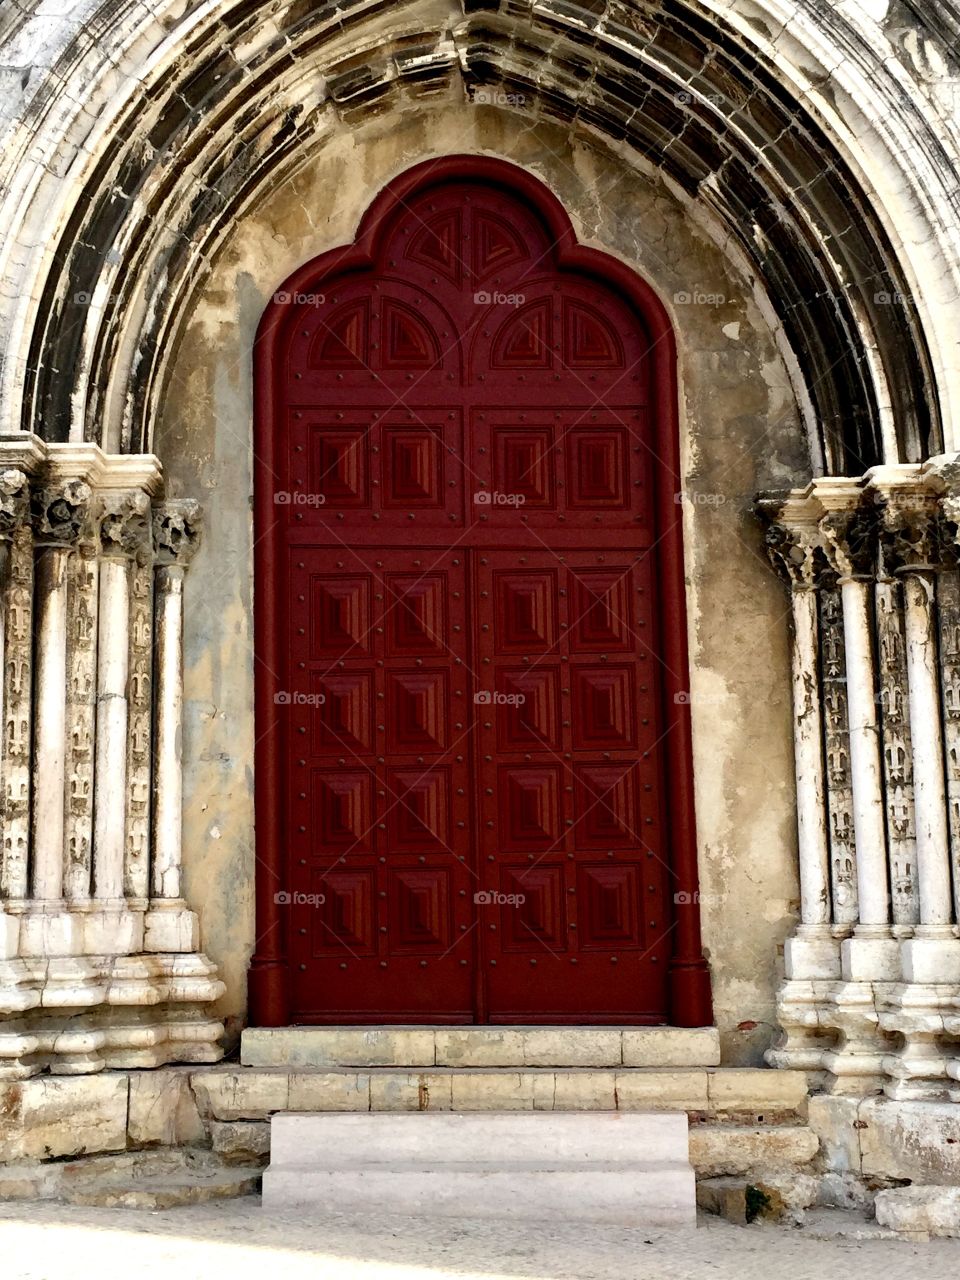 Architecture, Church, Entrance, Door, Arch